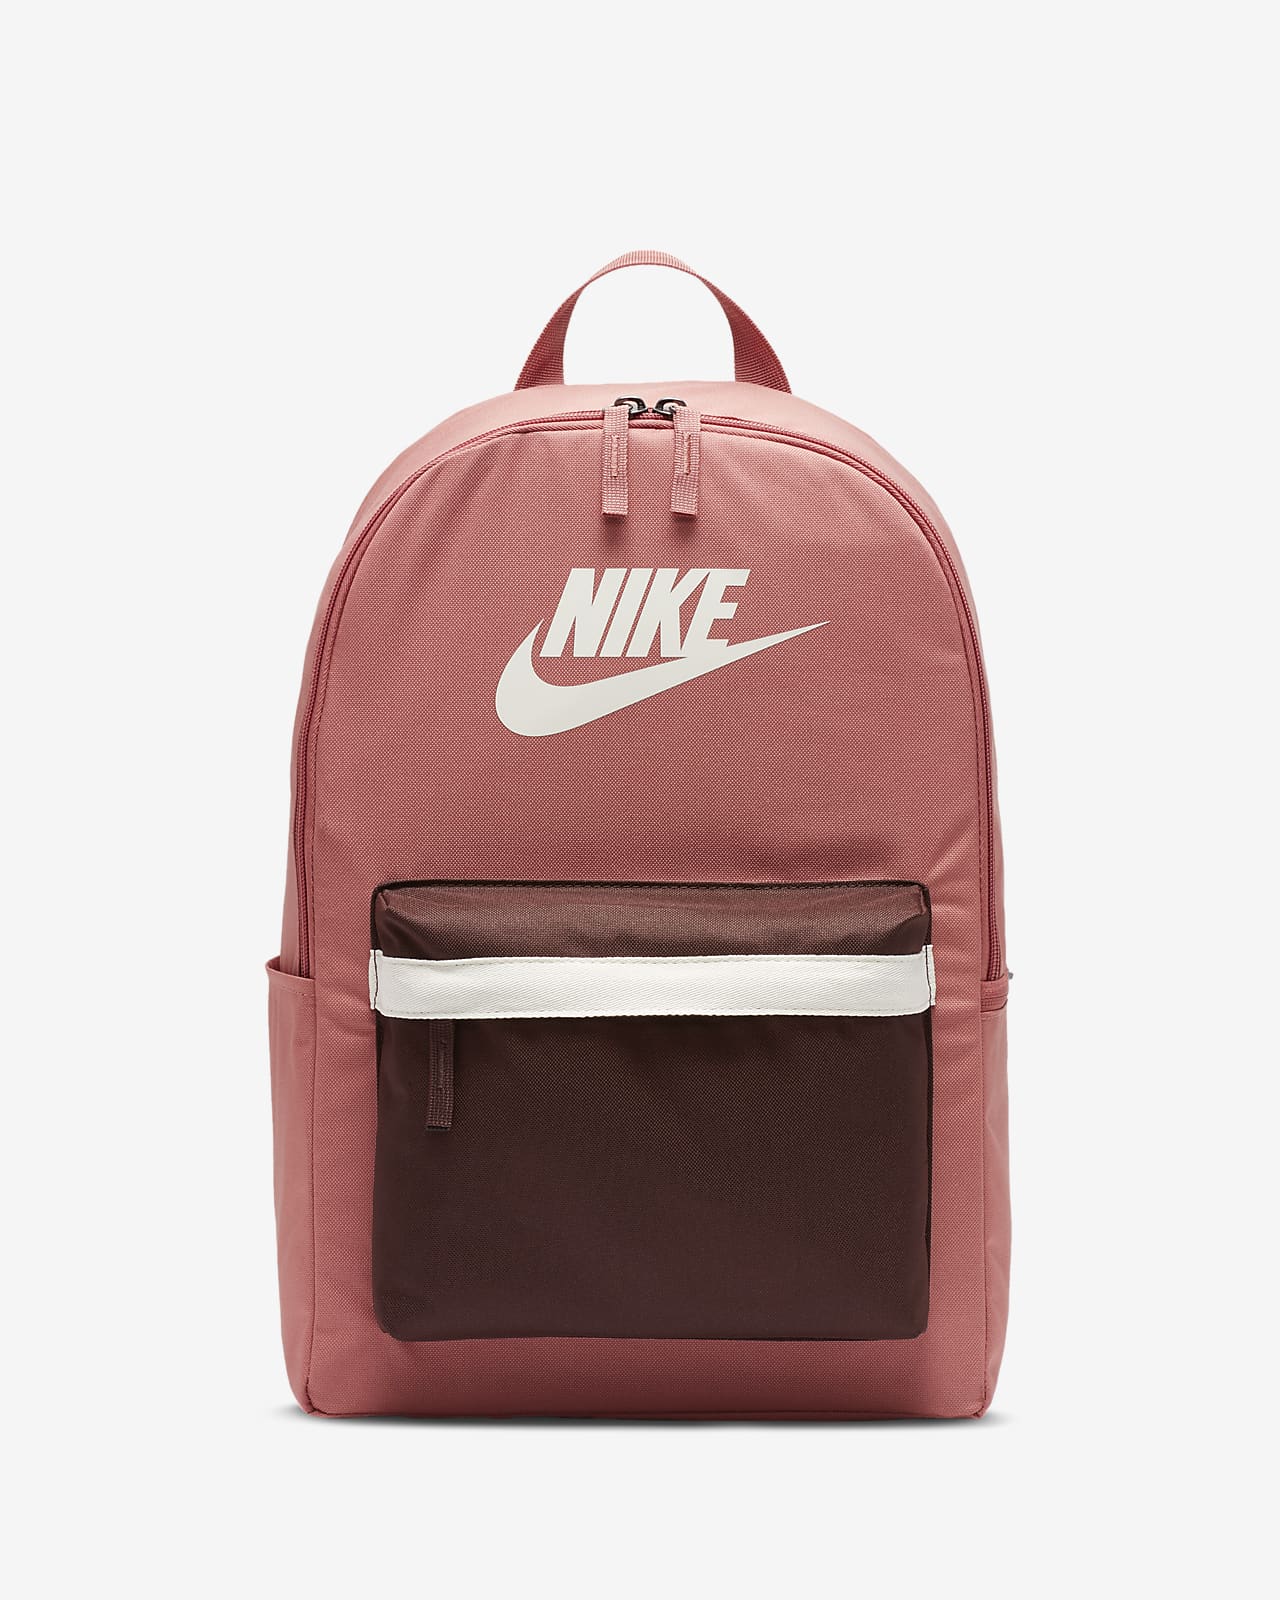 nike heritage backpack red